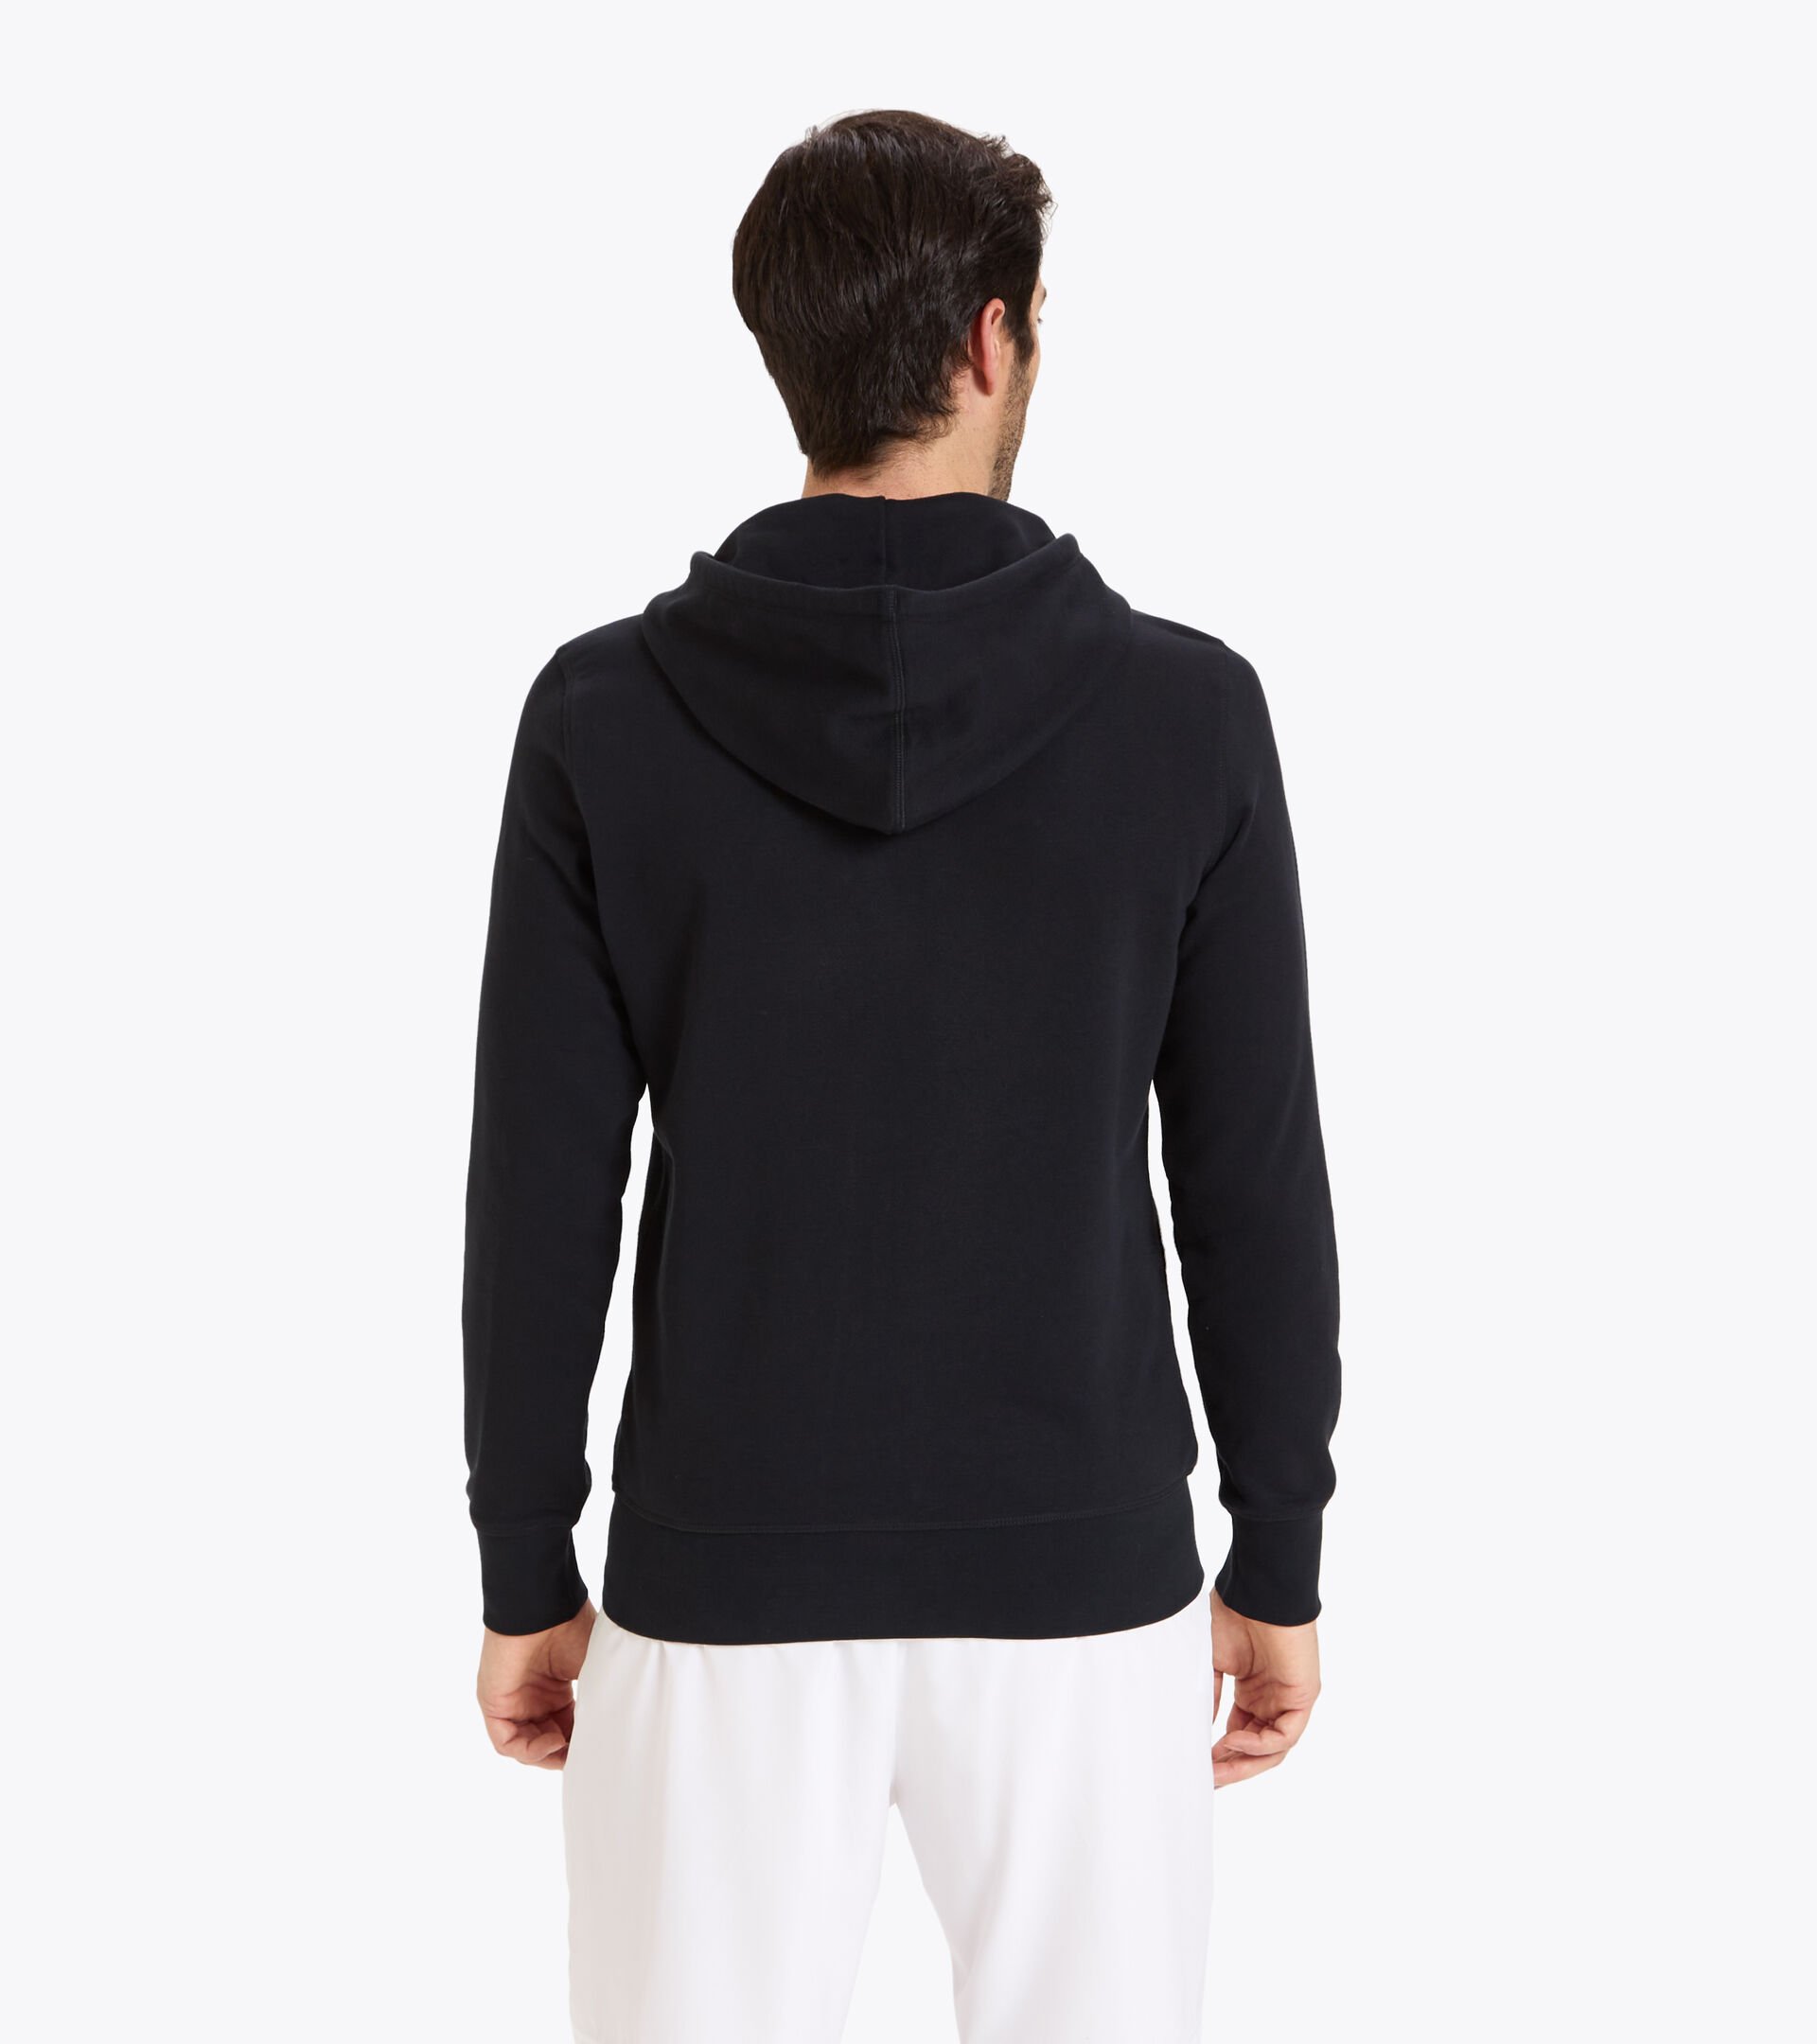 Tennis full zipper hoodie - Men HD FZ SWEAT DIADORA CLUB BLACK - Diadora